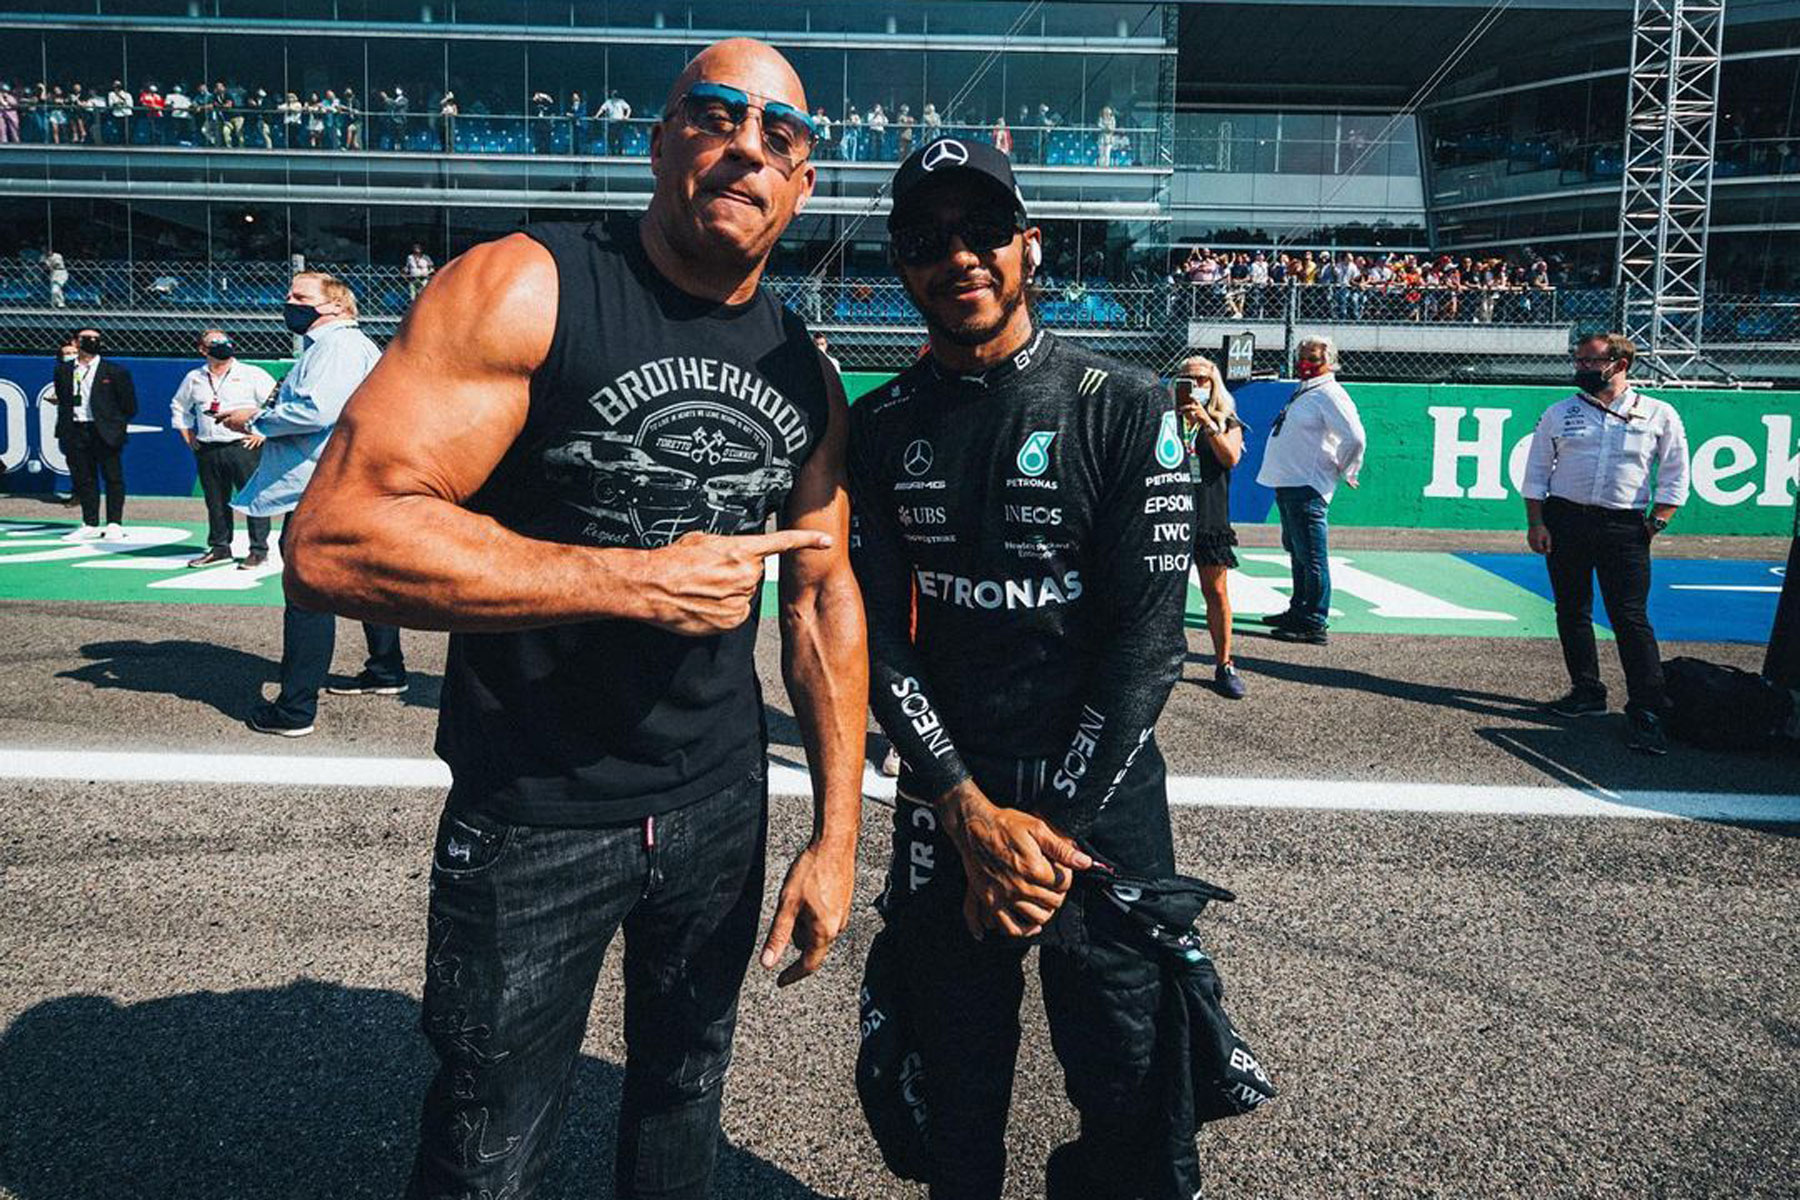 Lewis Hamilton Reveals 'Fast & Furious' Training Buddy At Italian Grand Prix